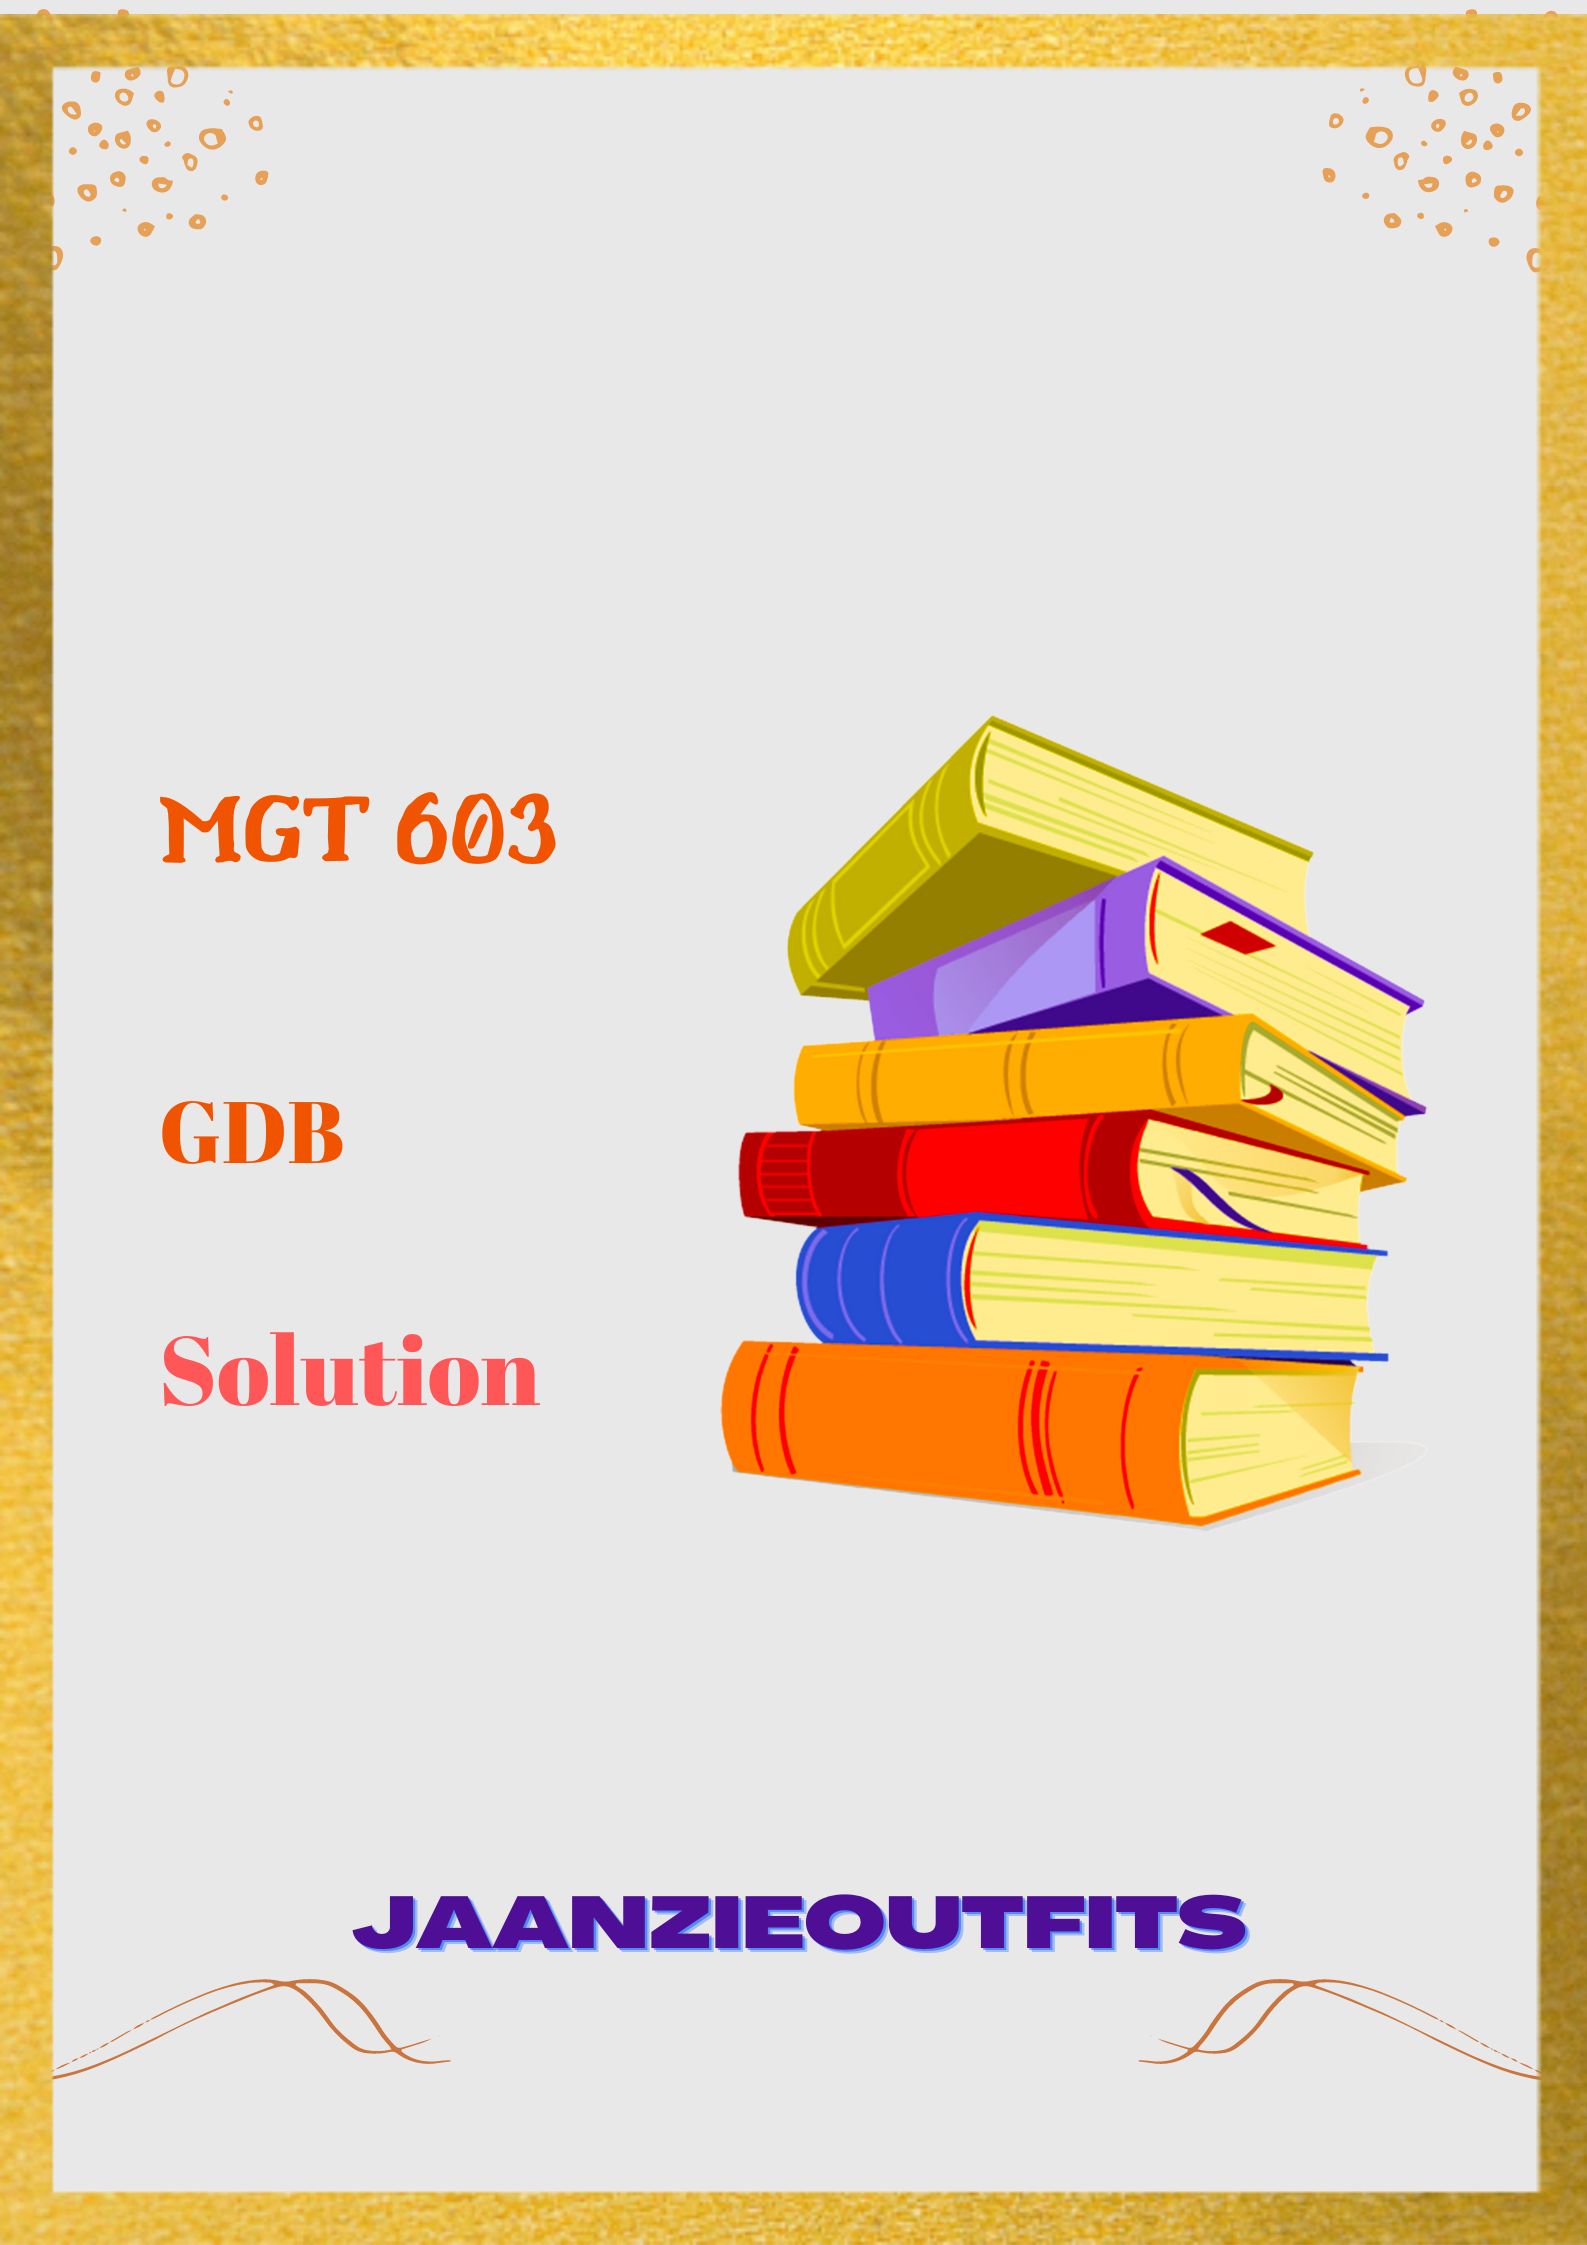 MGT 603 (GDB)